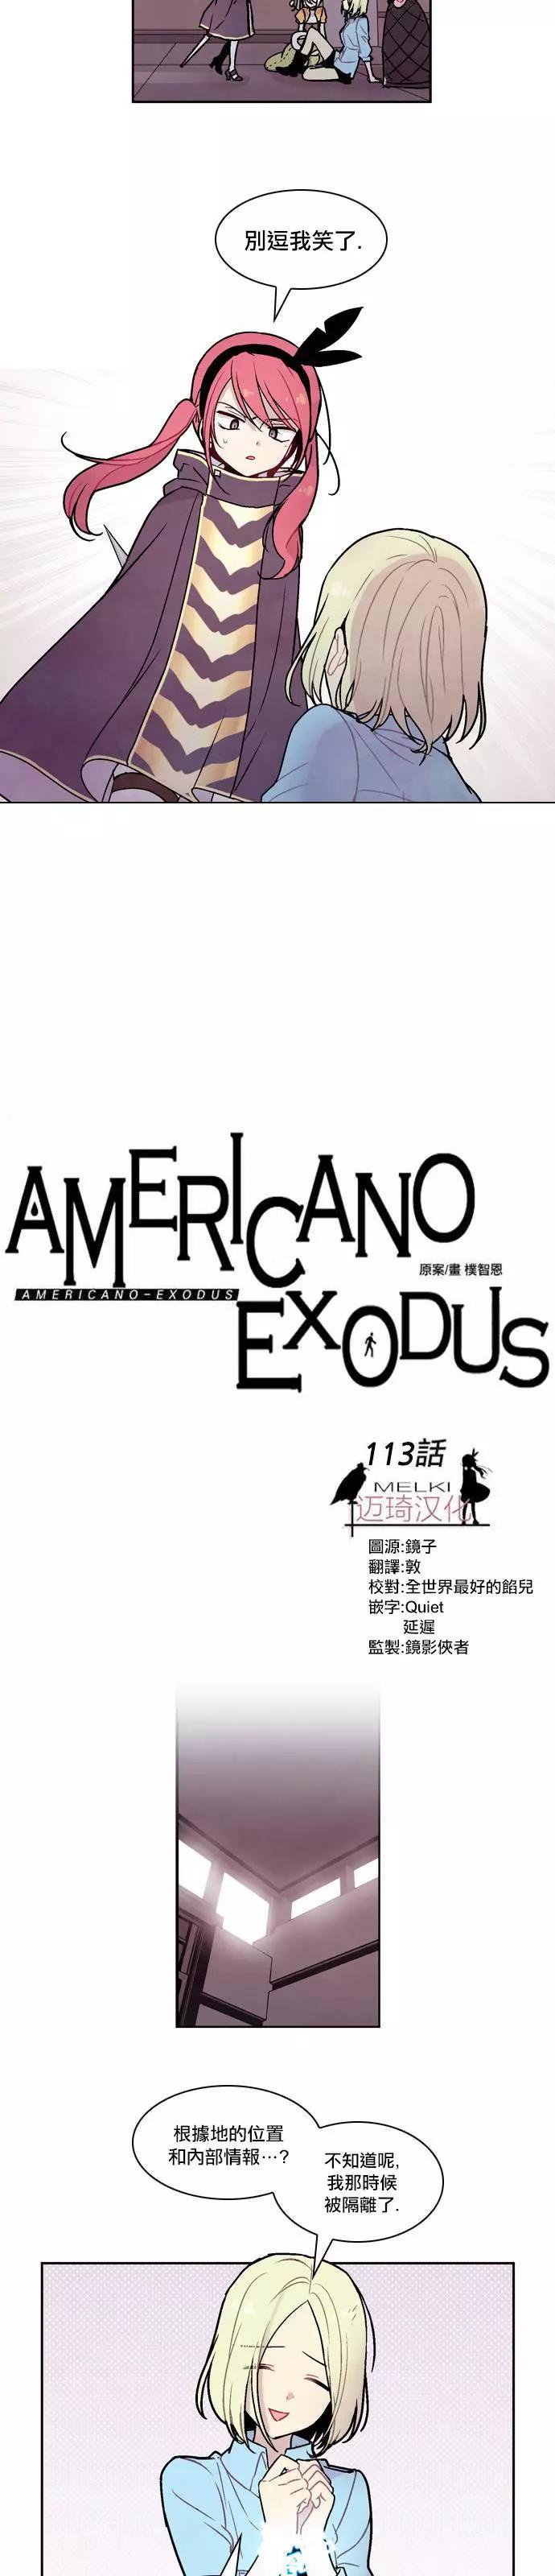 Americano-exodus - 第113回 - 3